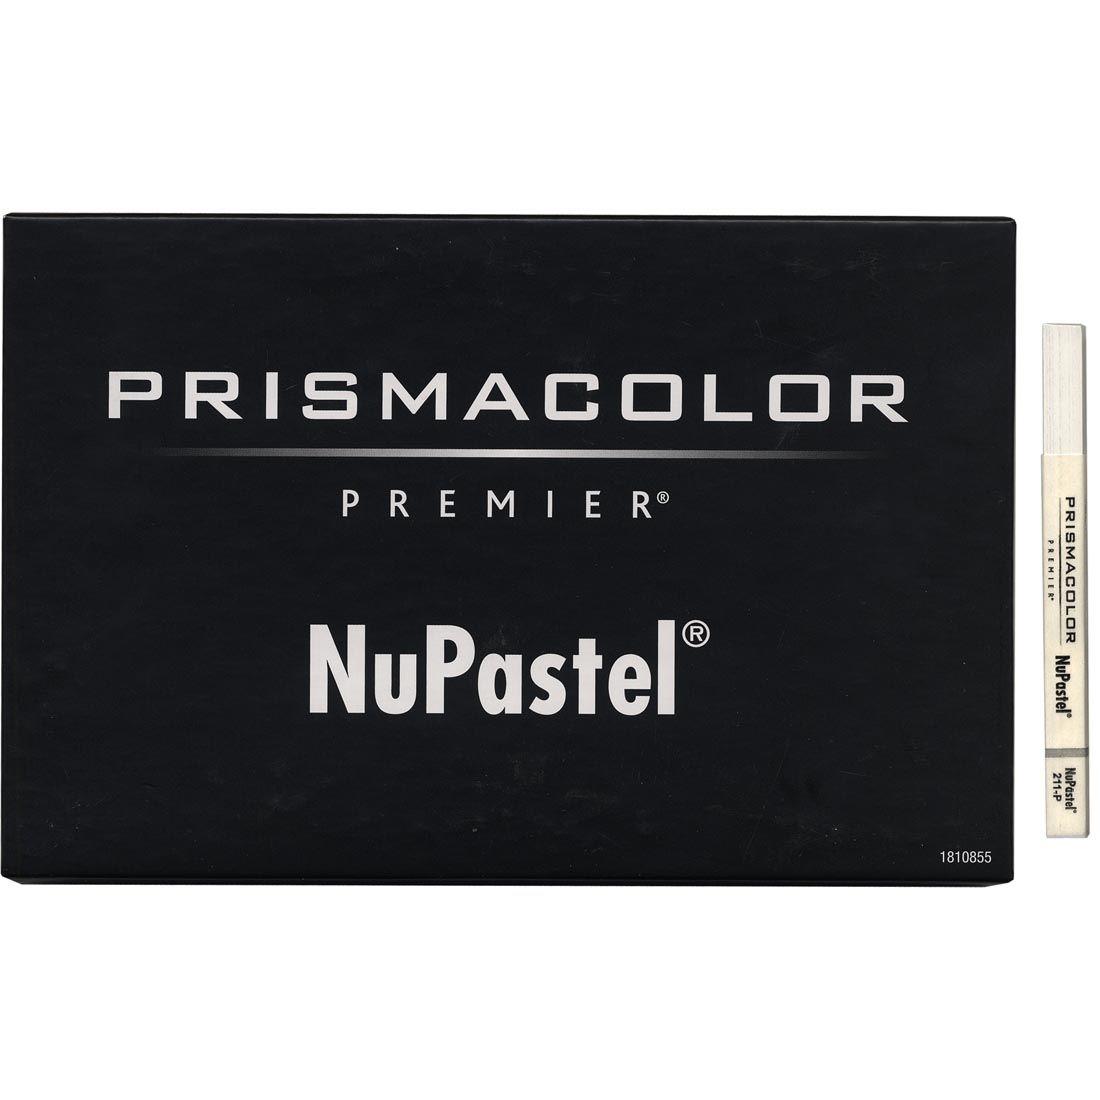 Prismacolor Logo - Prismacolor Premier Nupastel Color Sticks